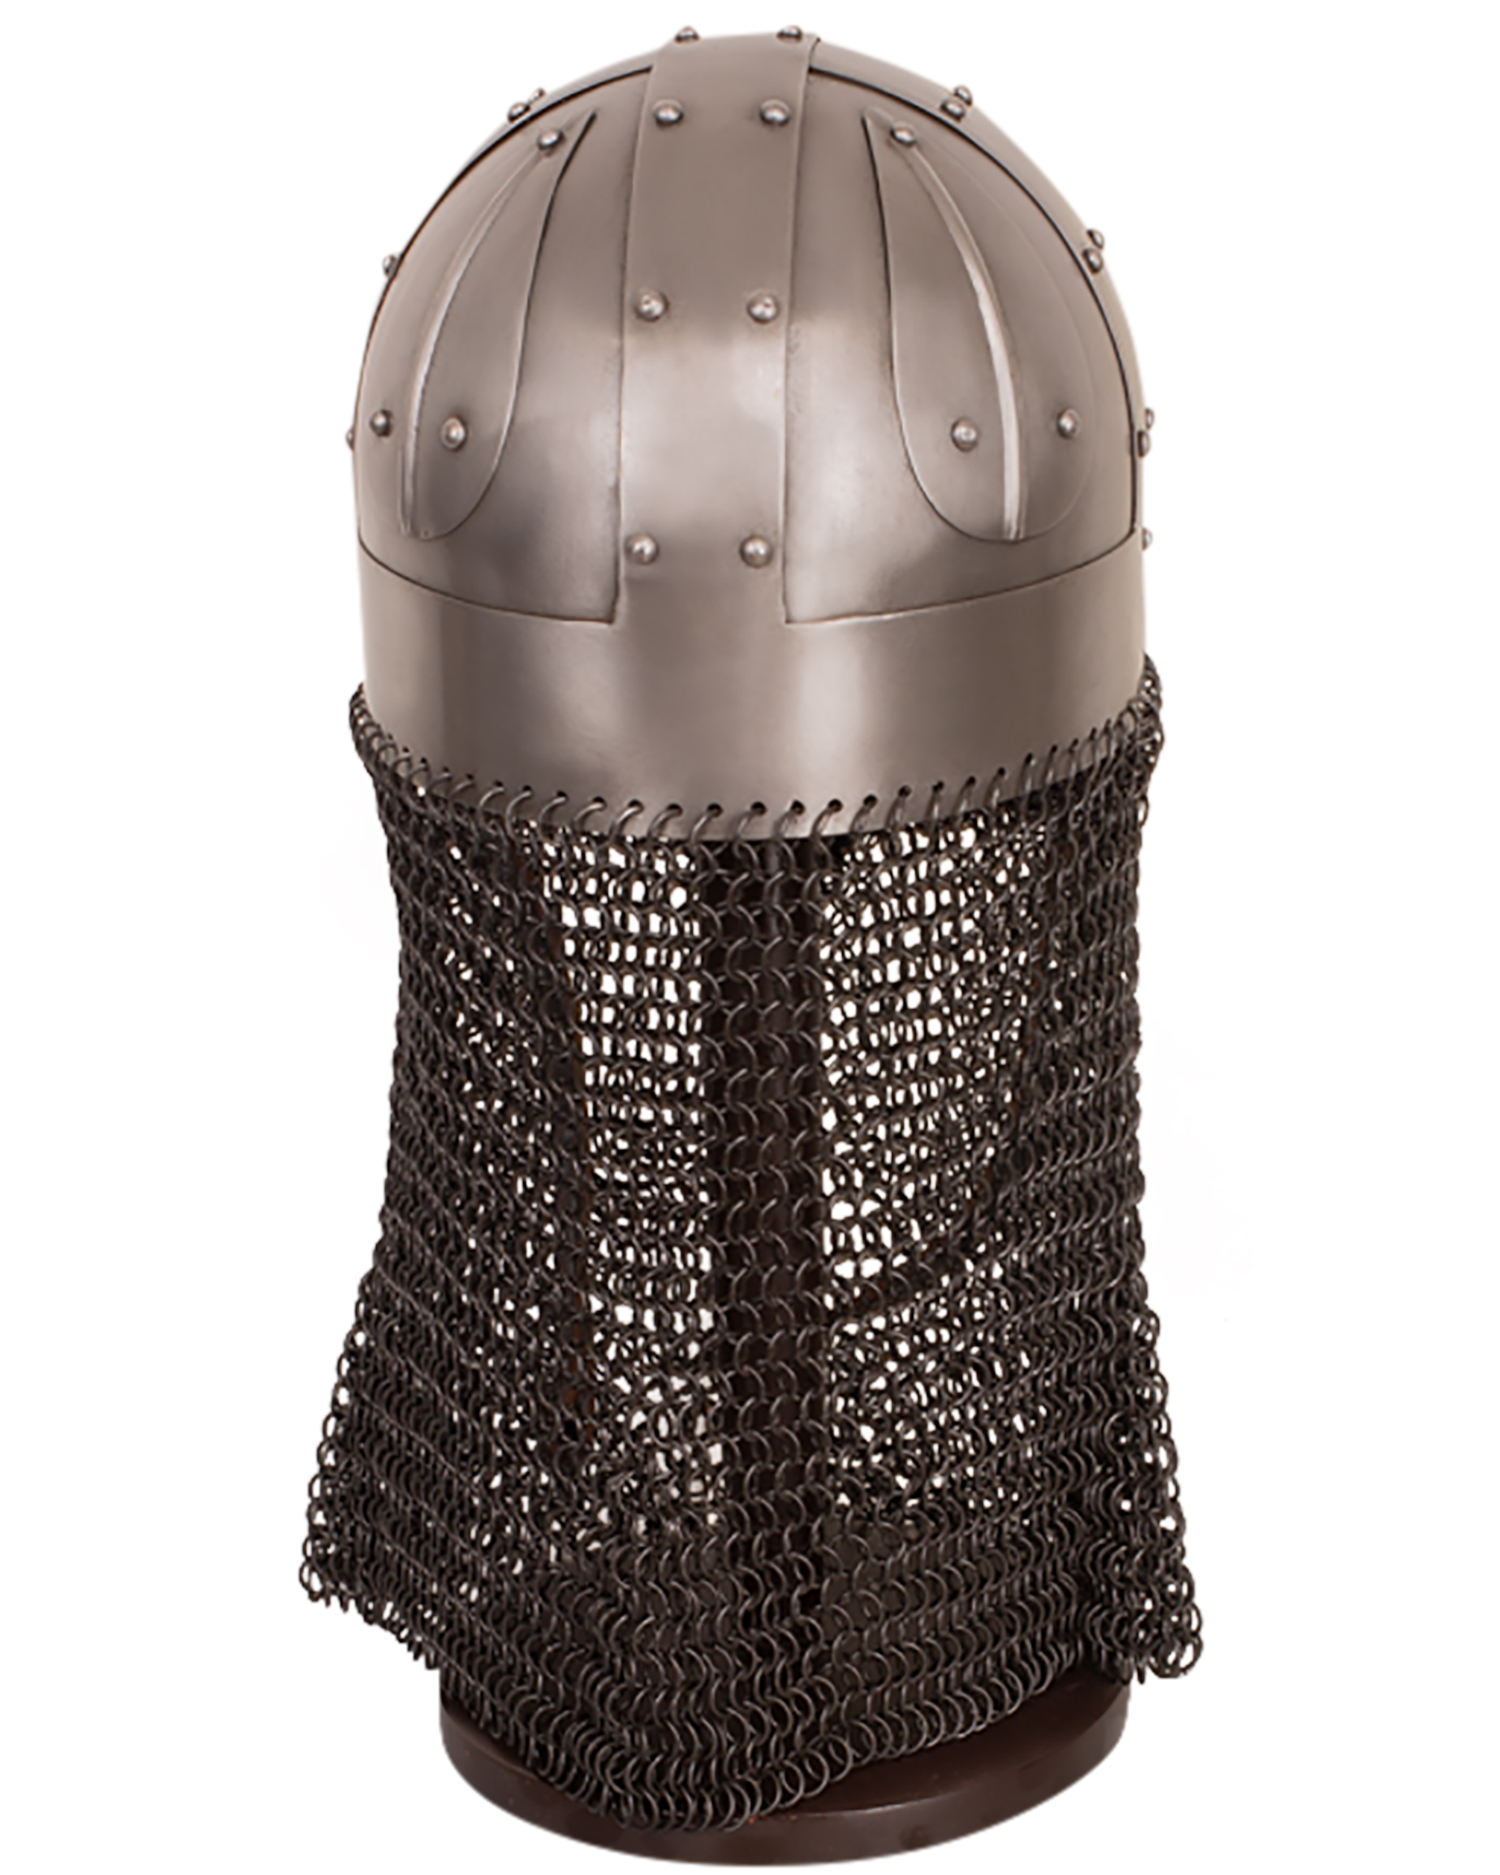 Ulfrik Viking helmet with aventail